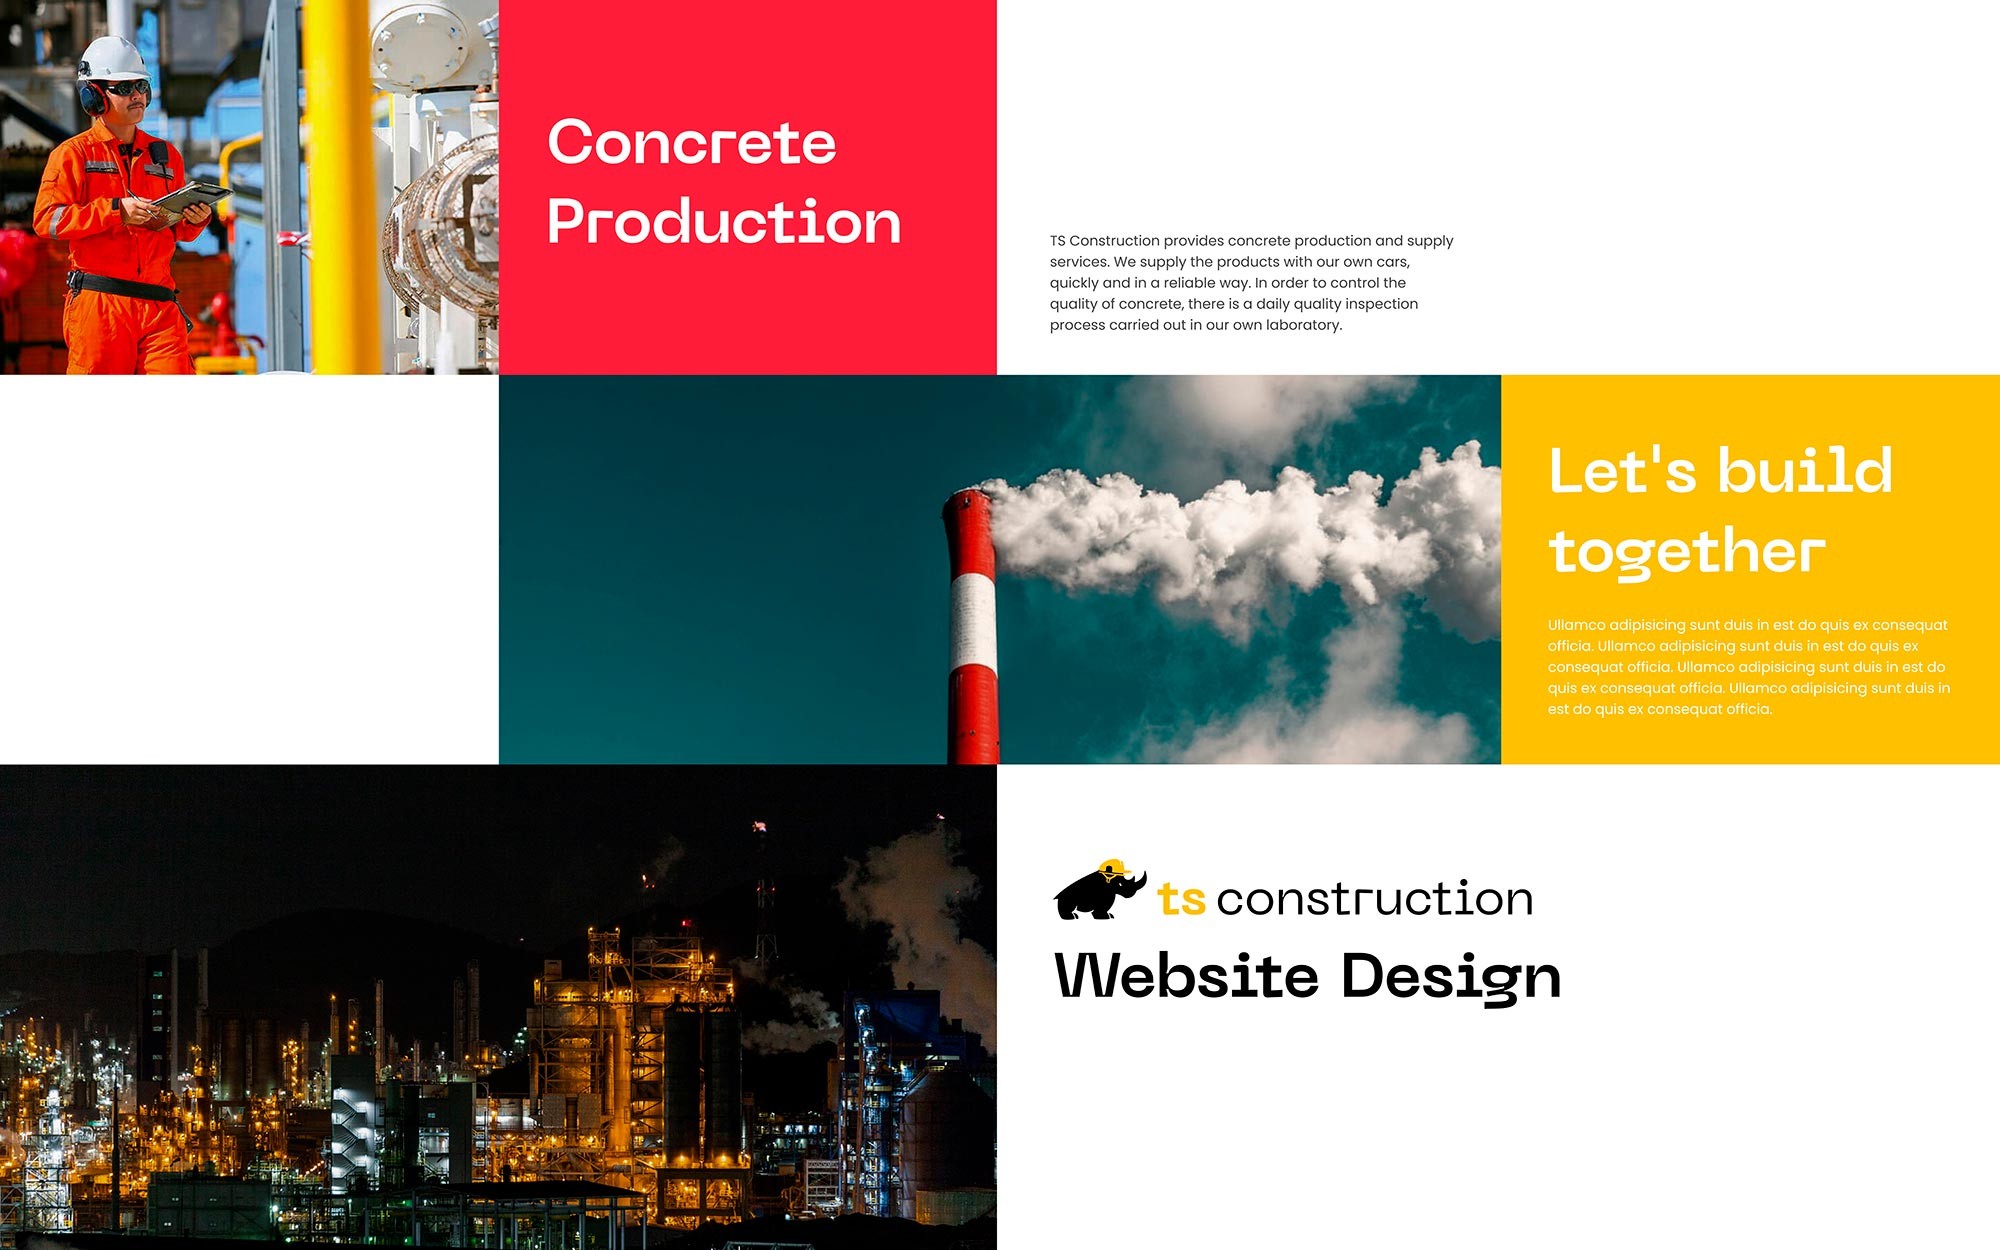 Website Design for TS Construction